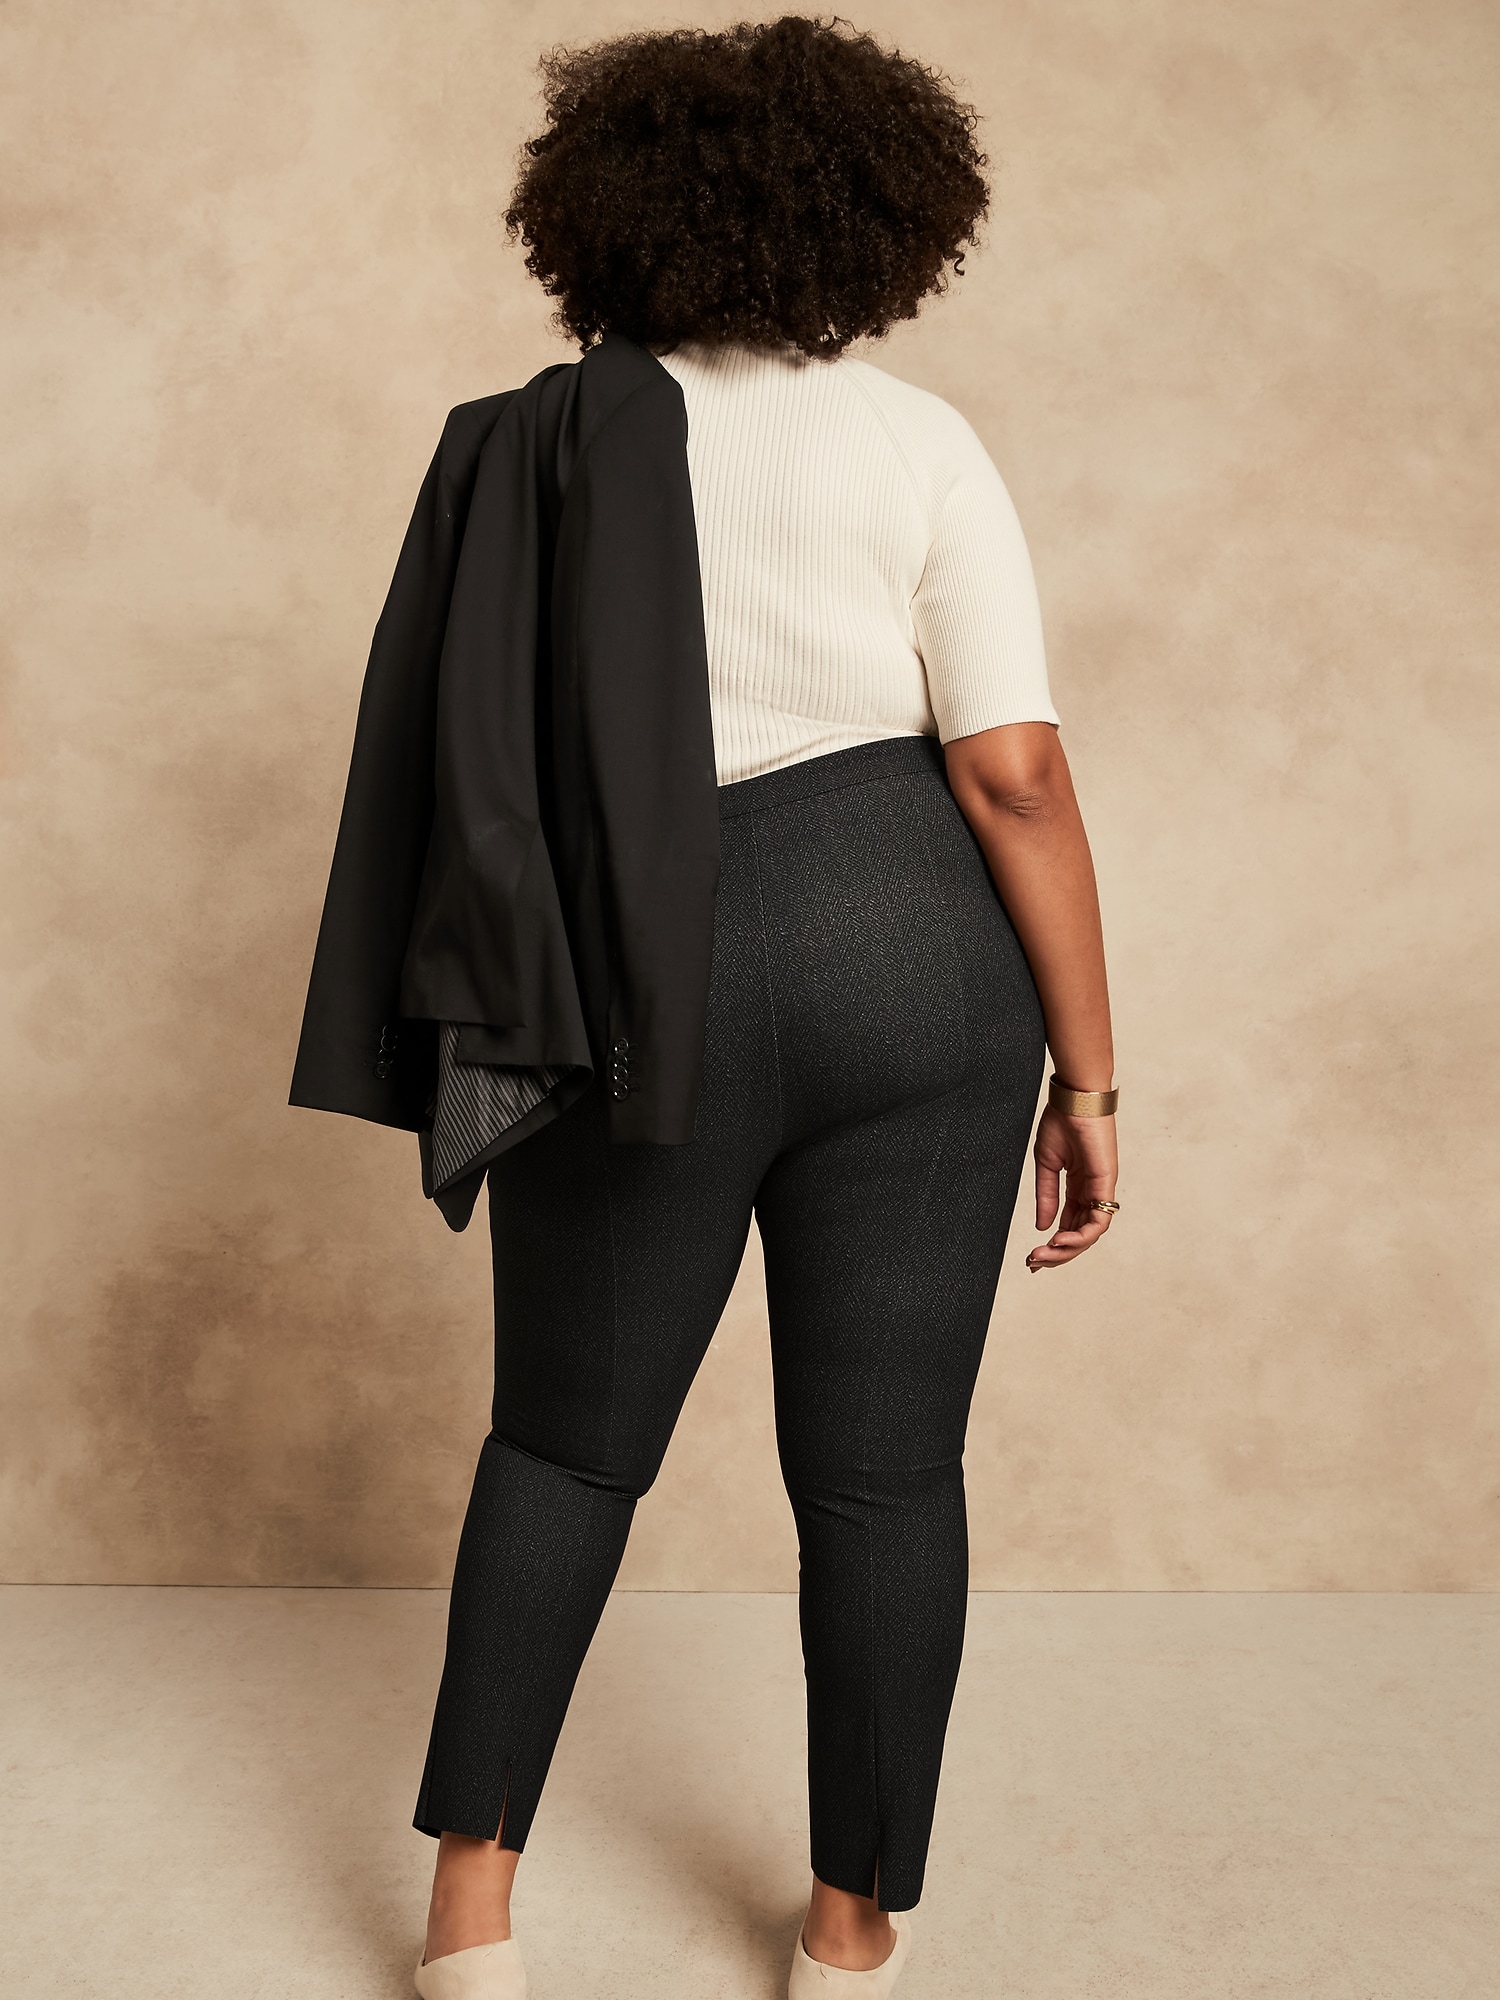 Banana Republic Women's Black Skinny Luxe Scuplt Pant Activewear Leggings  Size 6